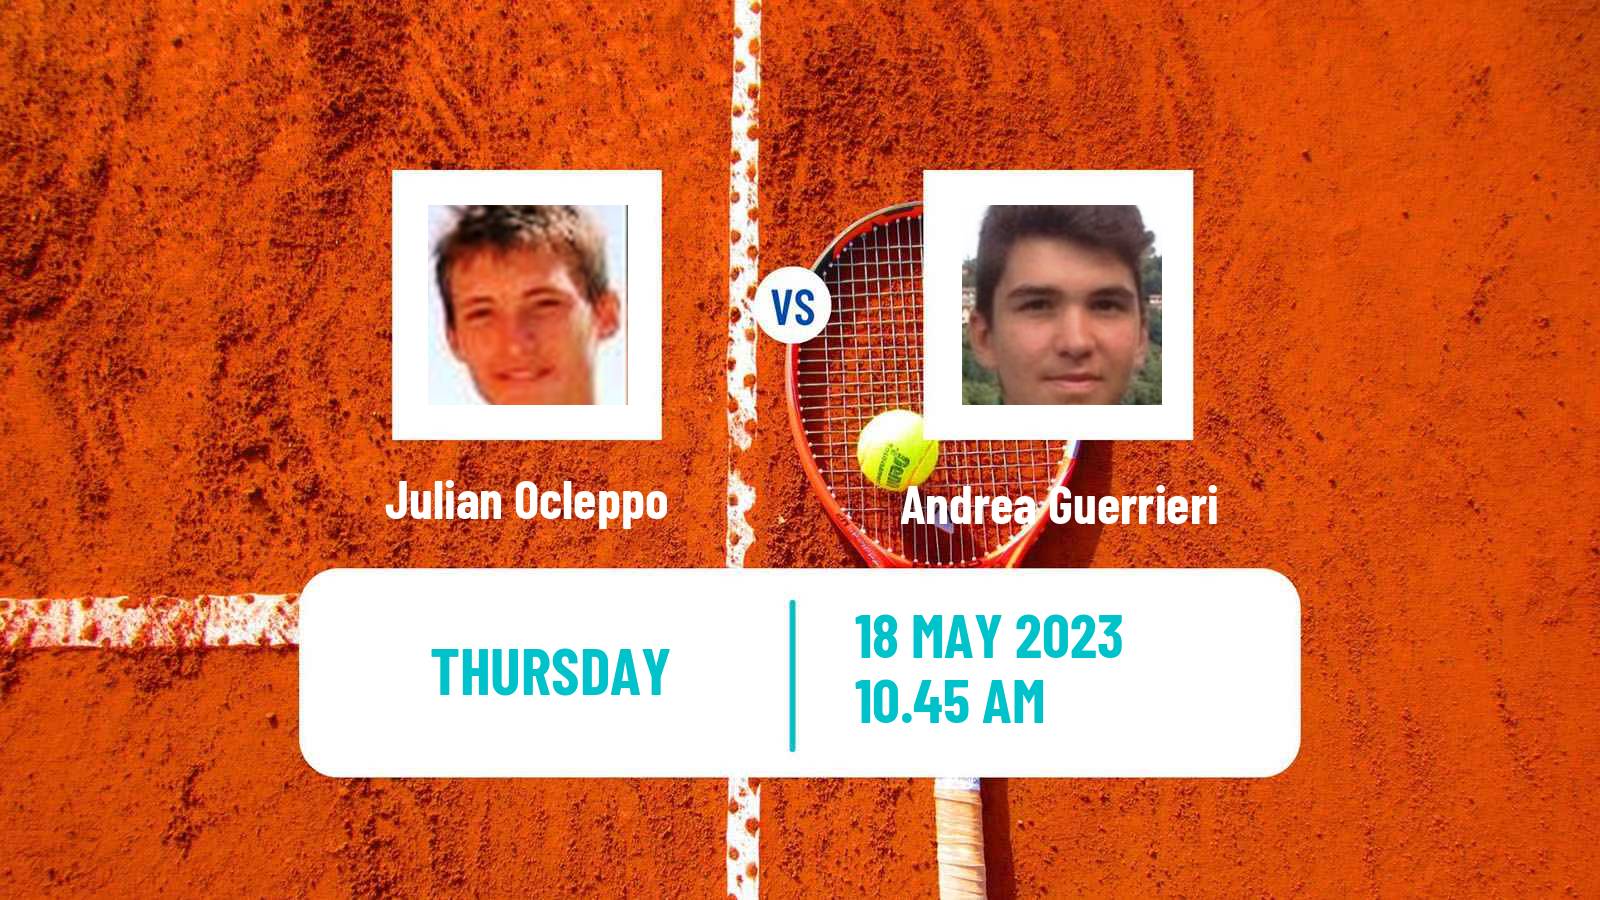 Tennis ITF M25 Reggio Emilia Men Julian Ocleppo - Andrea Guerrieri